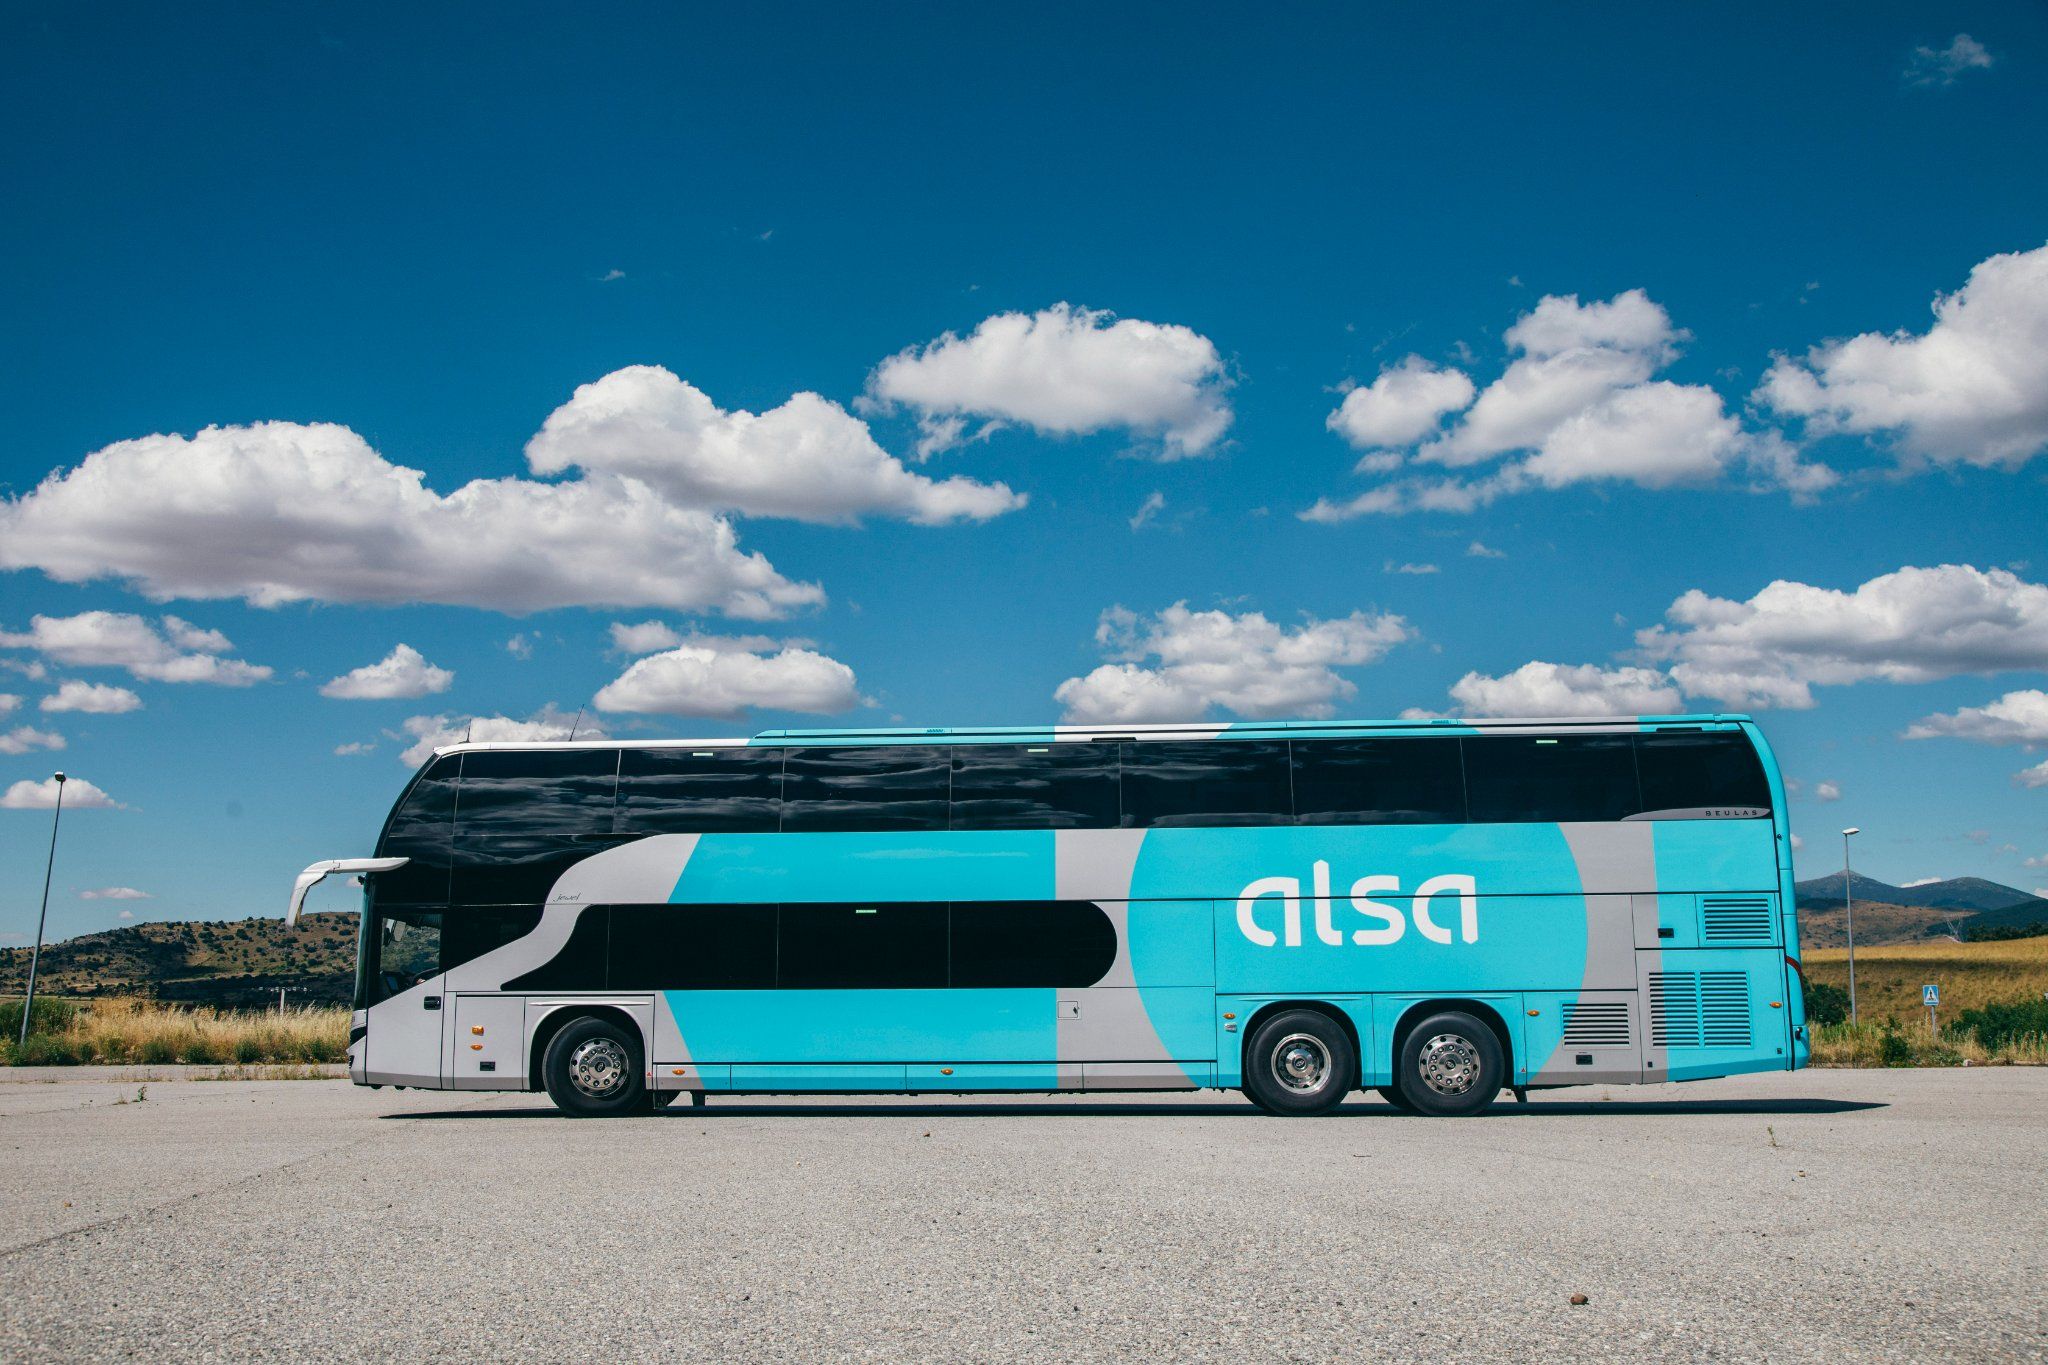 Autobús Alsa, dueño de la empresa que despidió a la conductora de autobús.